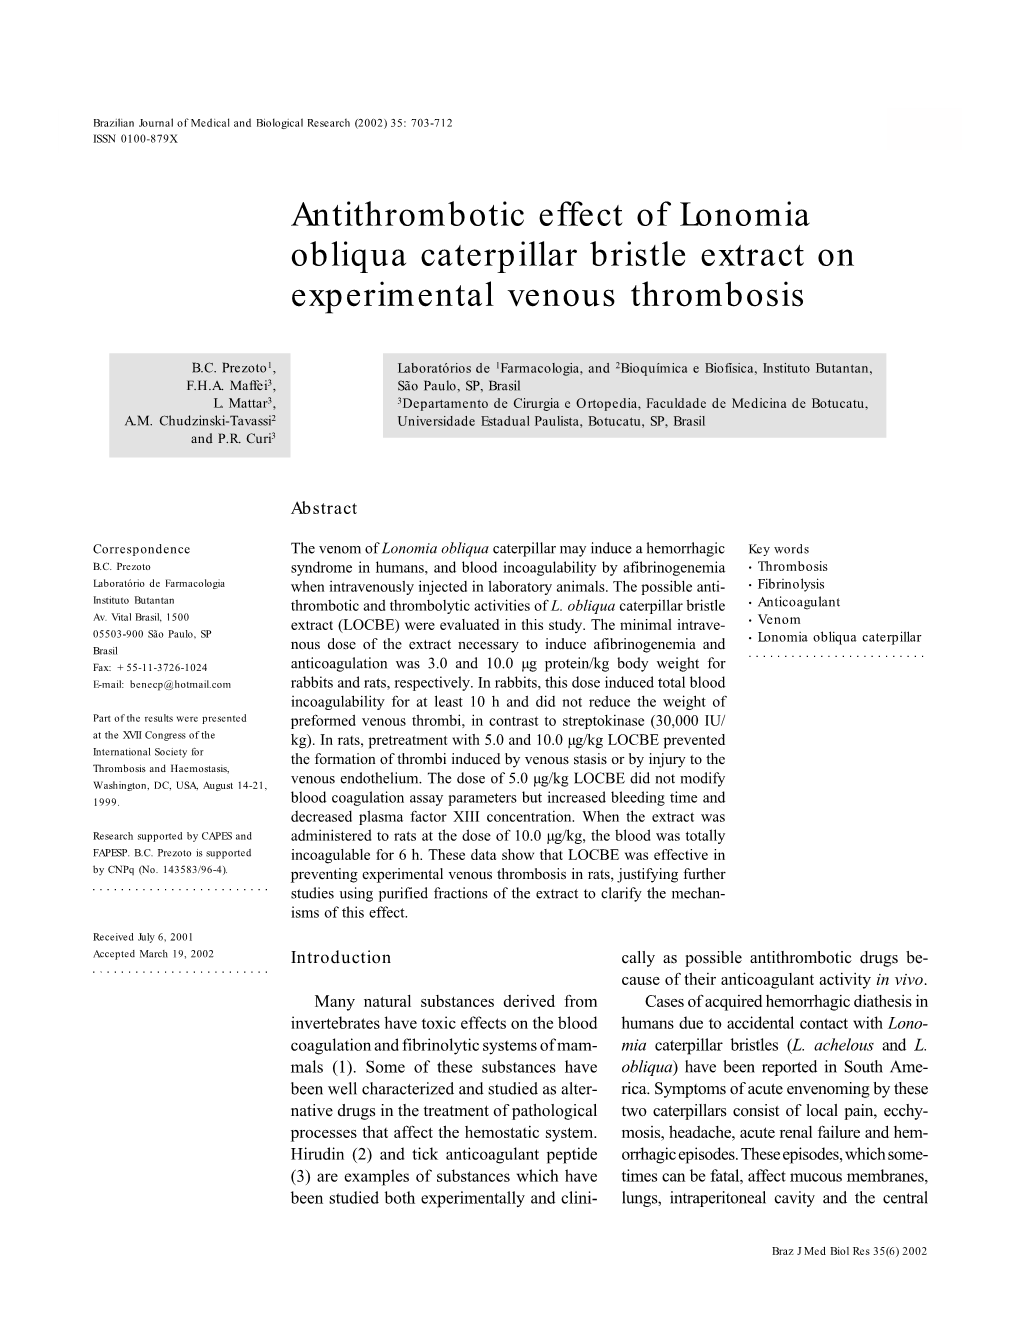 Antithrombotic Effect of Lonomia Obliqua Caterpillar Bristle Extract on Experimental Venous Thrombosis